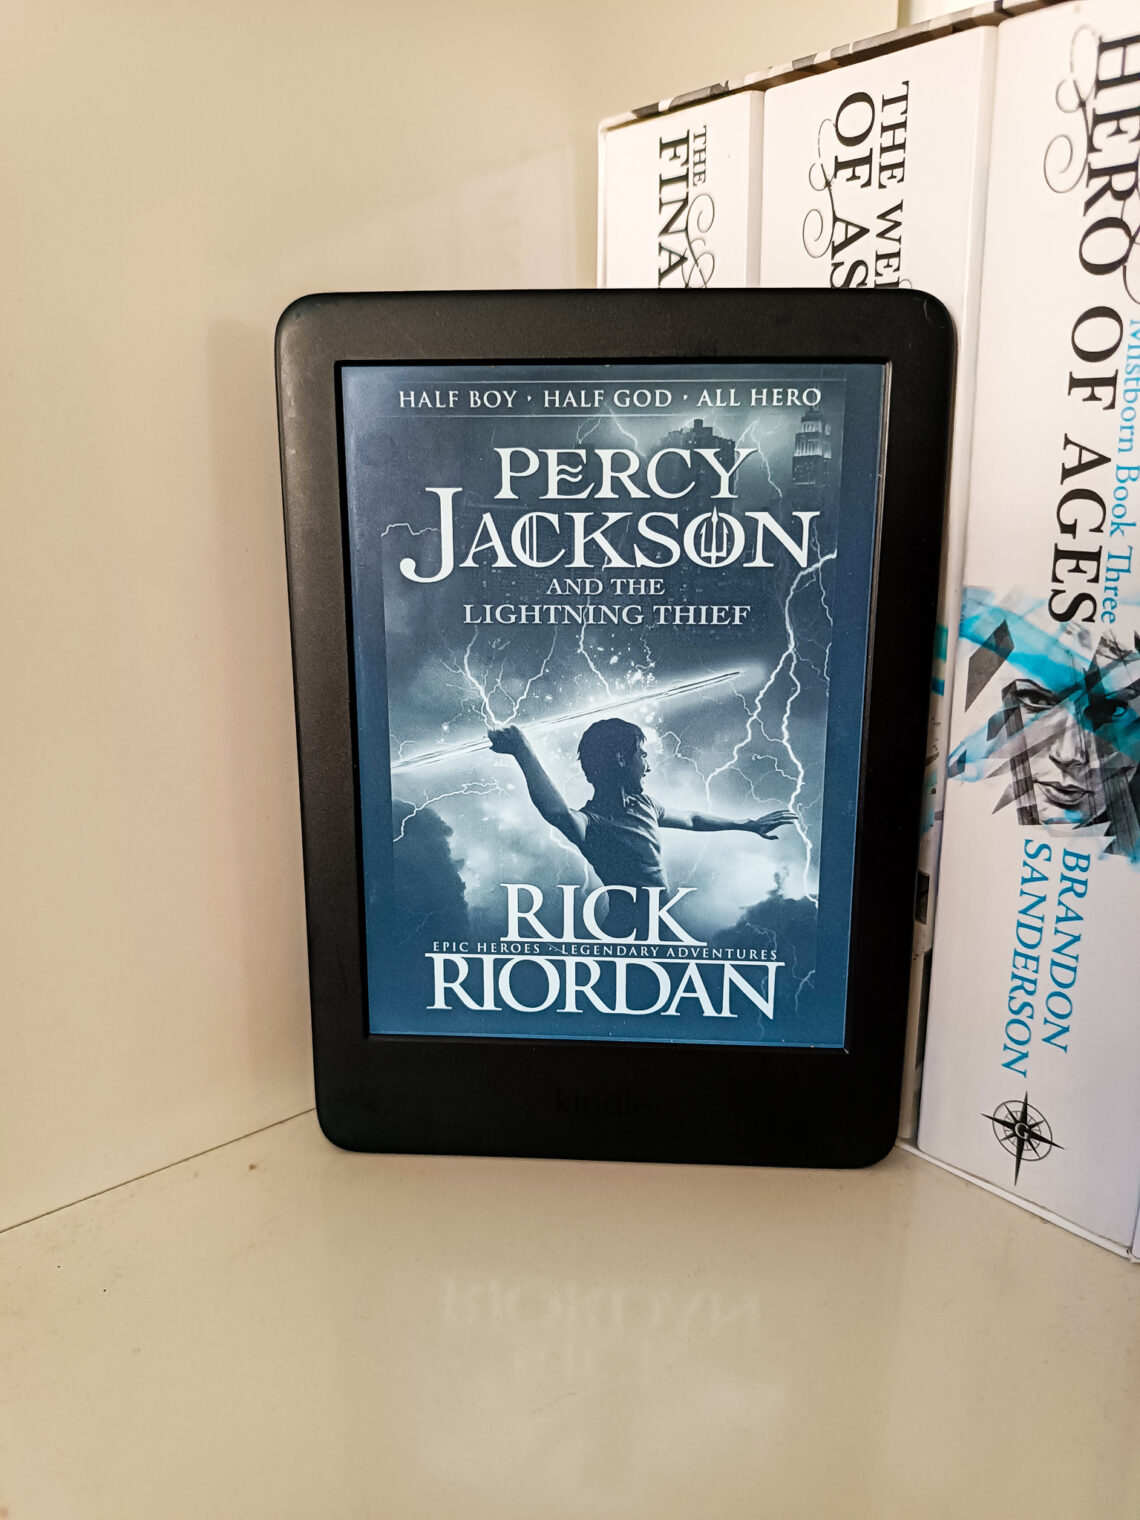 ‘Percy Jackson and the lightning thief’ by Rick Riordan